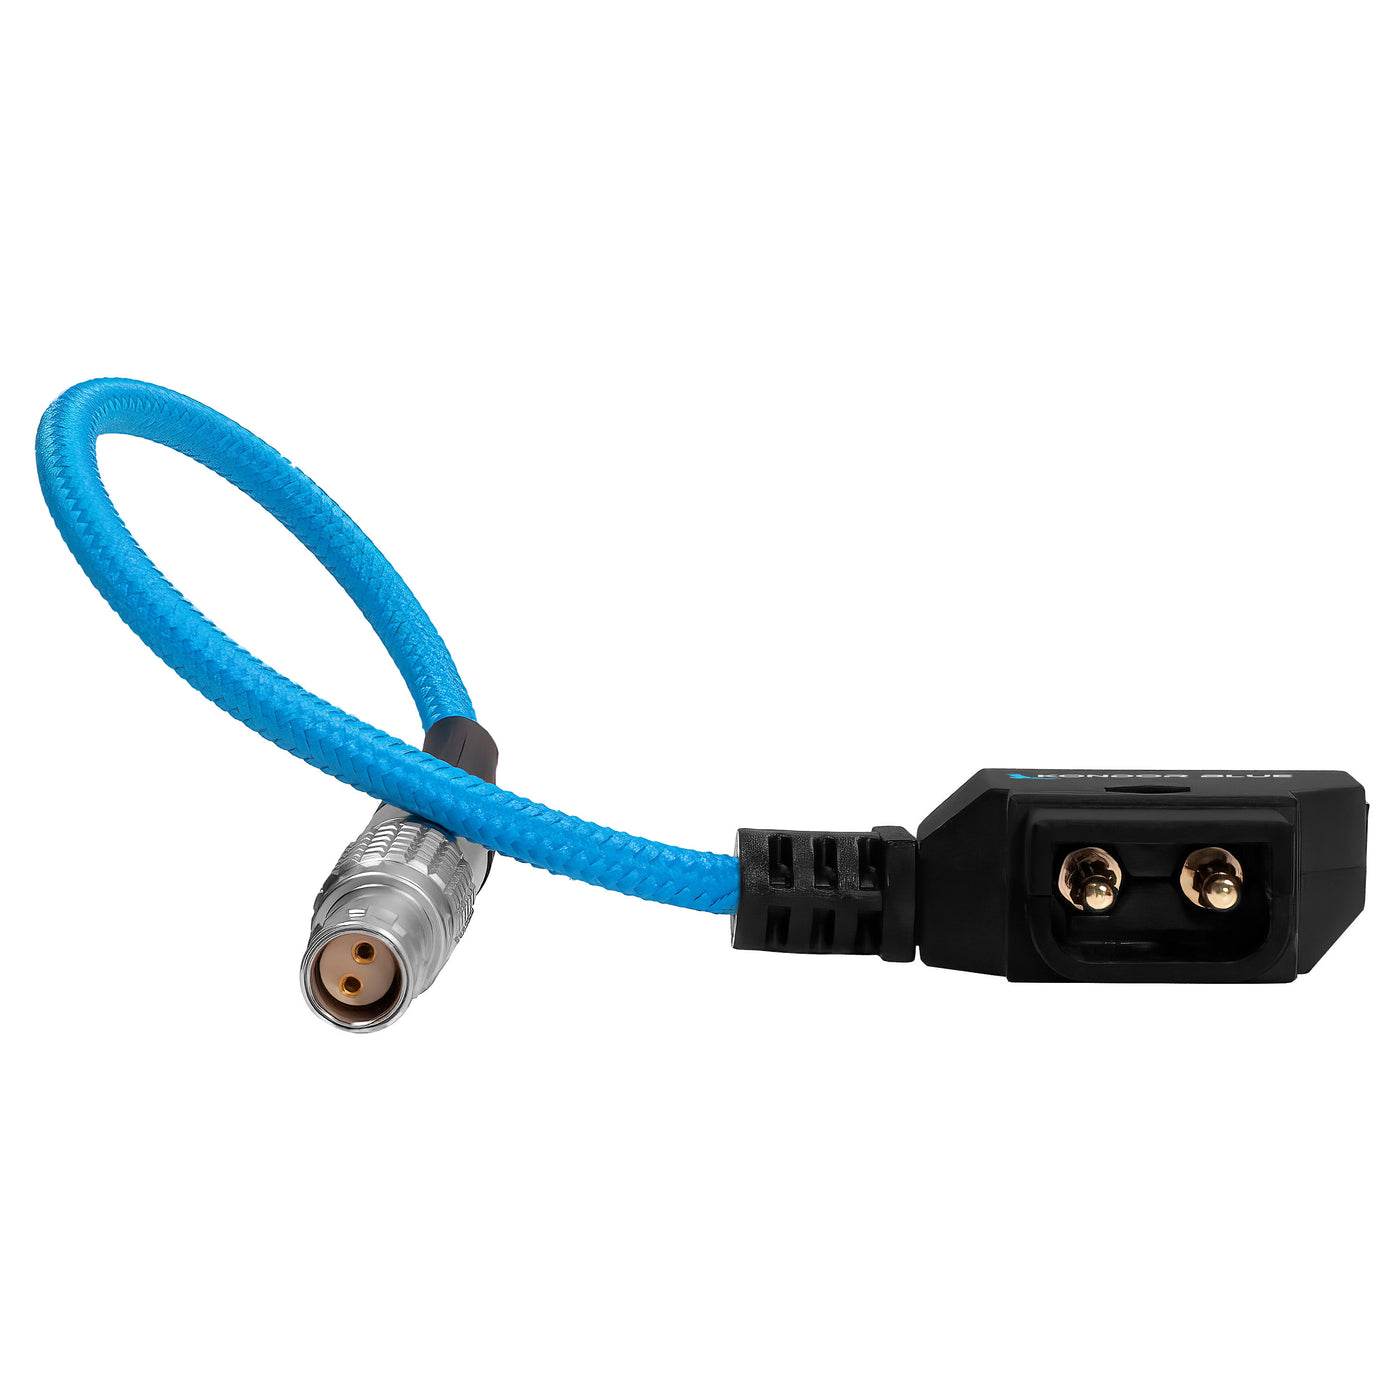 6" D-Tap to 2 Pin Lemo Female Adapter Cable for teradek